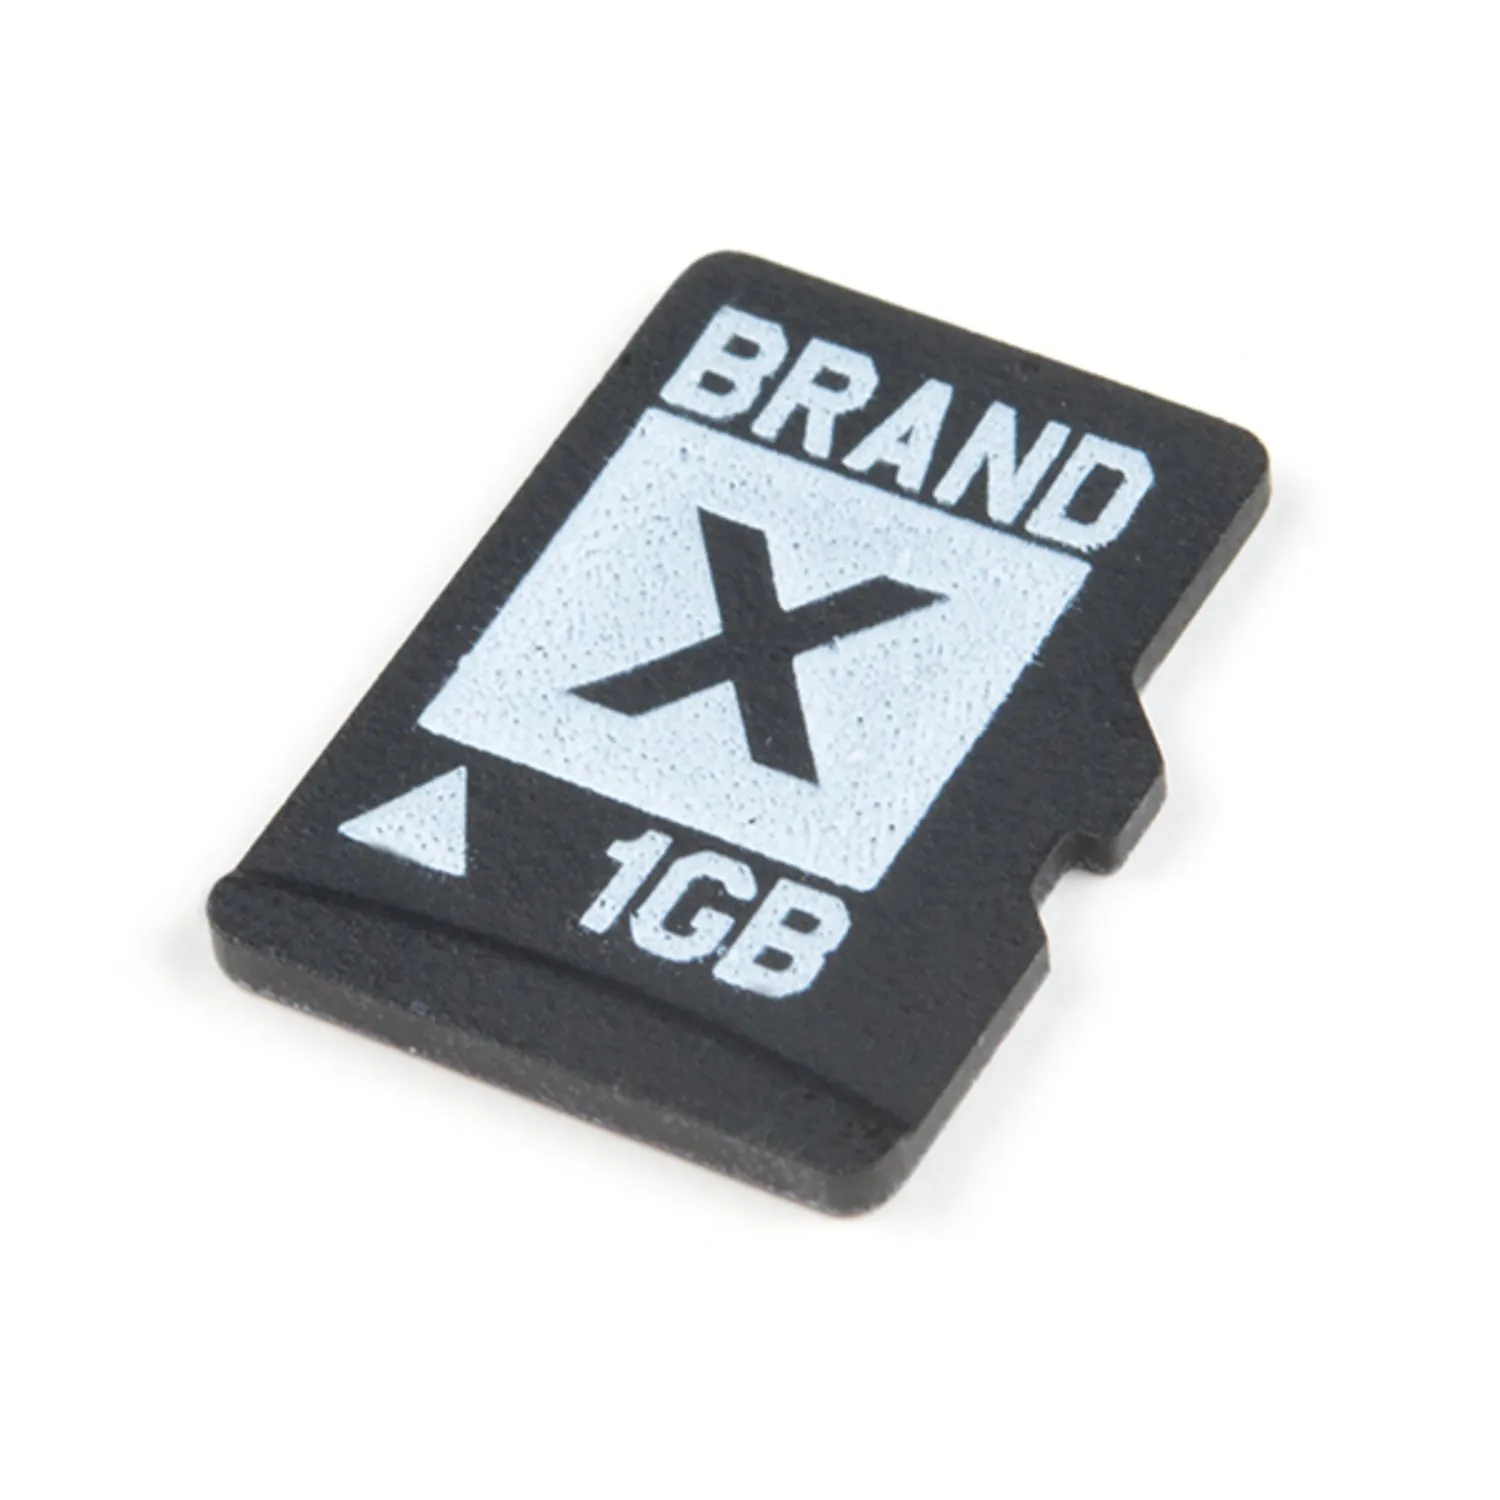 Photo of microSD Card - 1GB (Class 4)